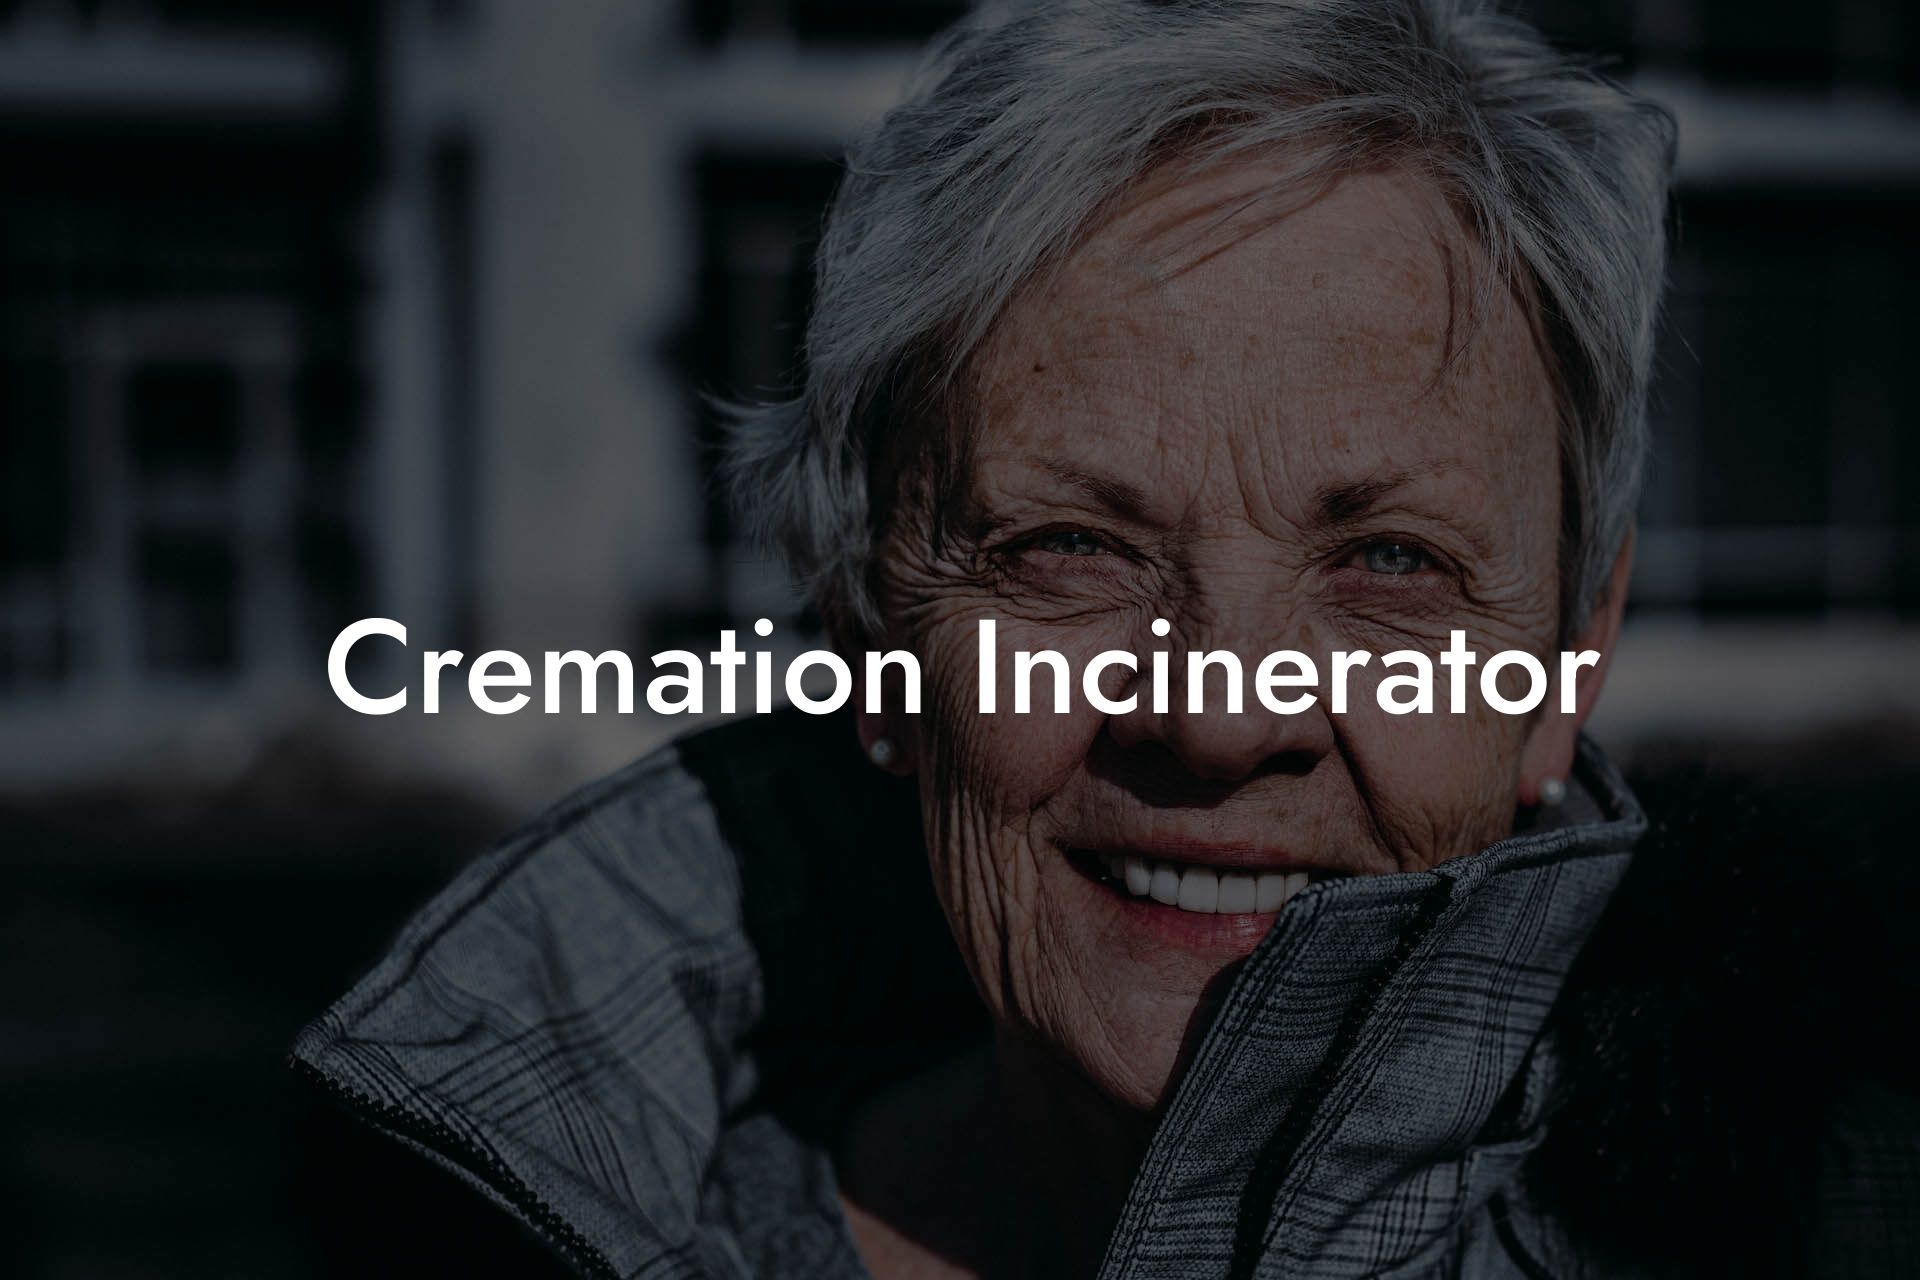 Cremation Incinerator